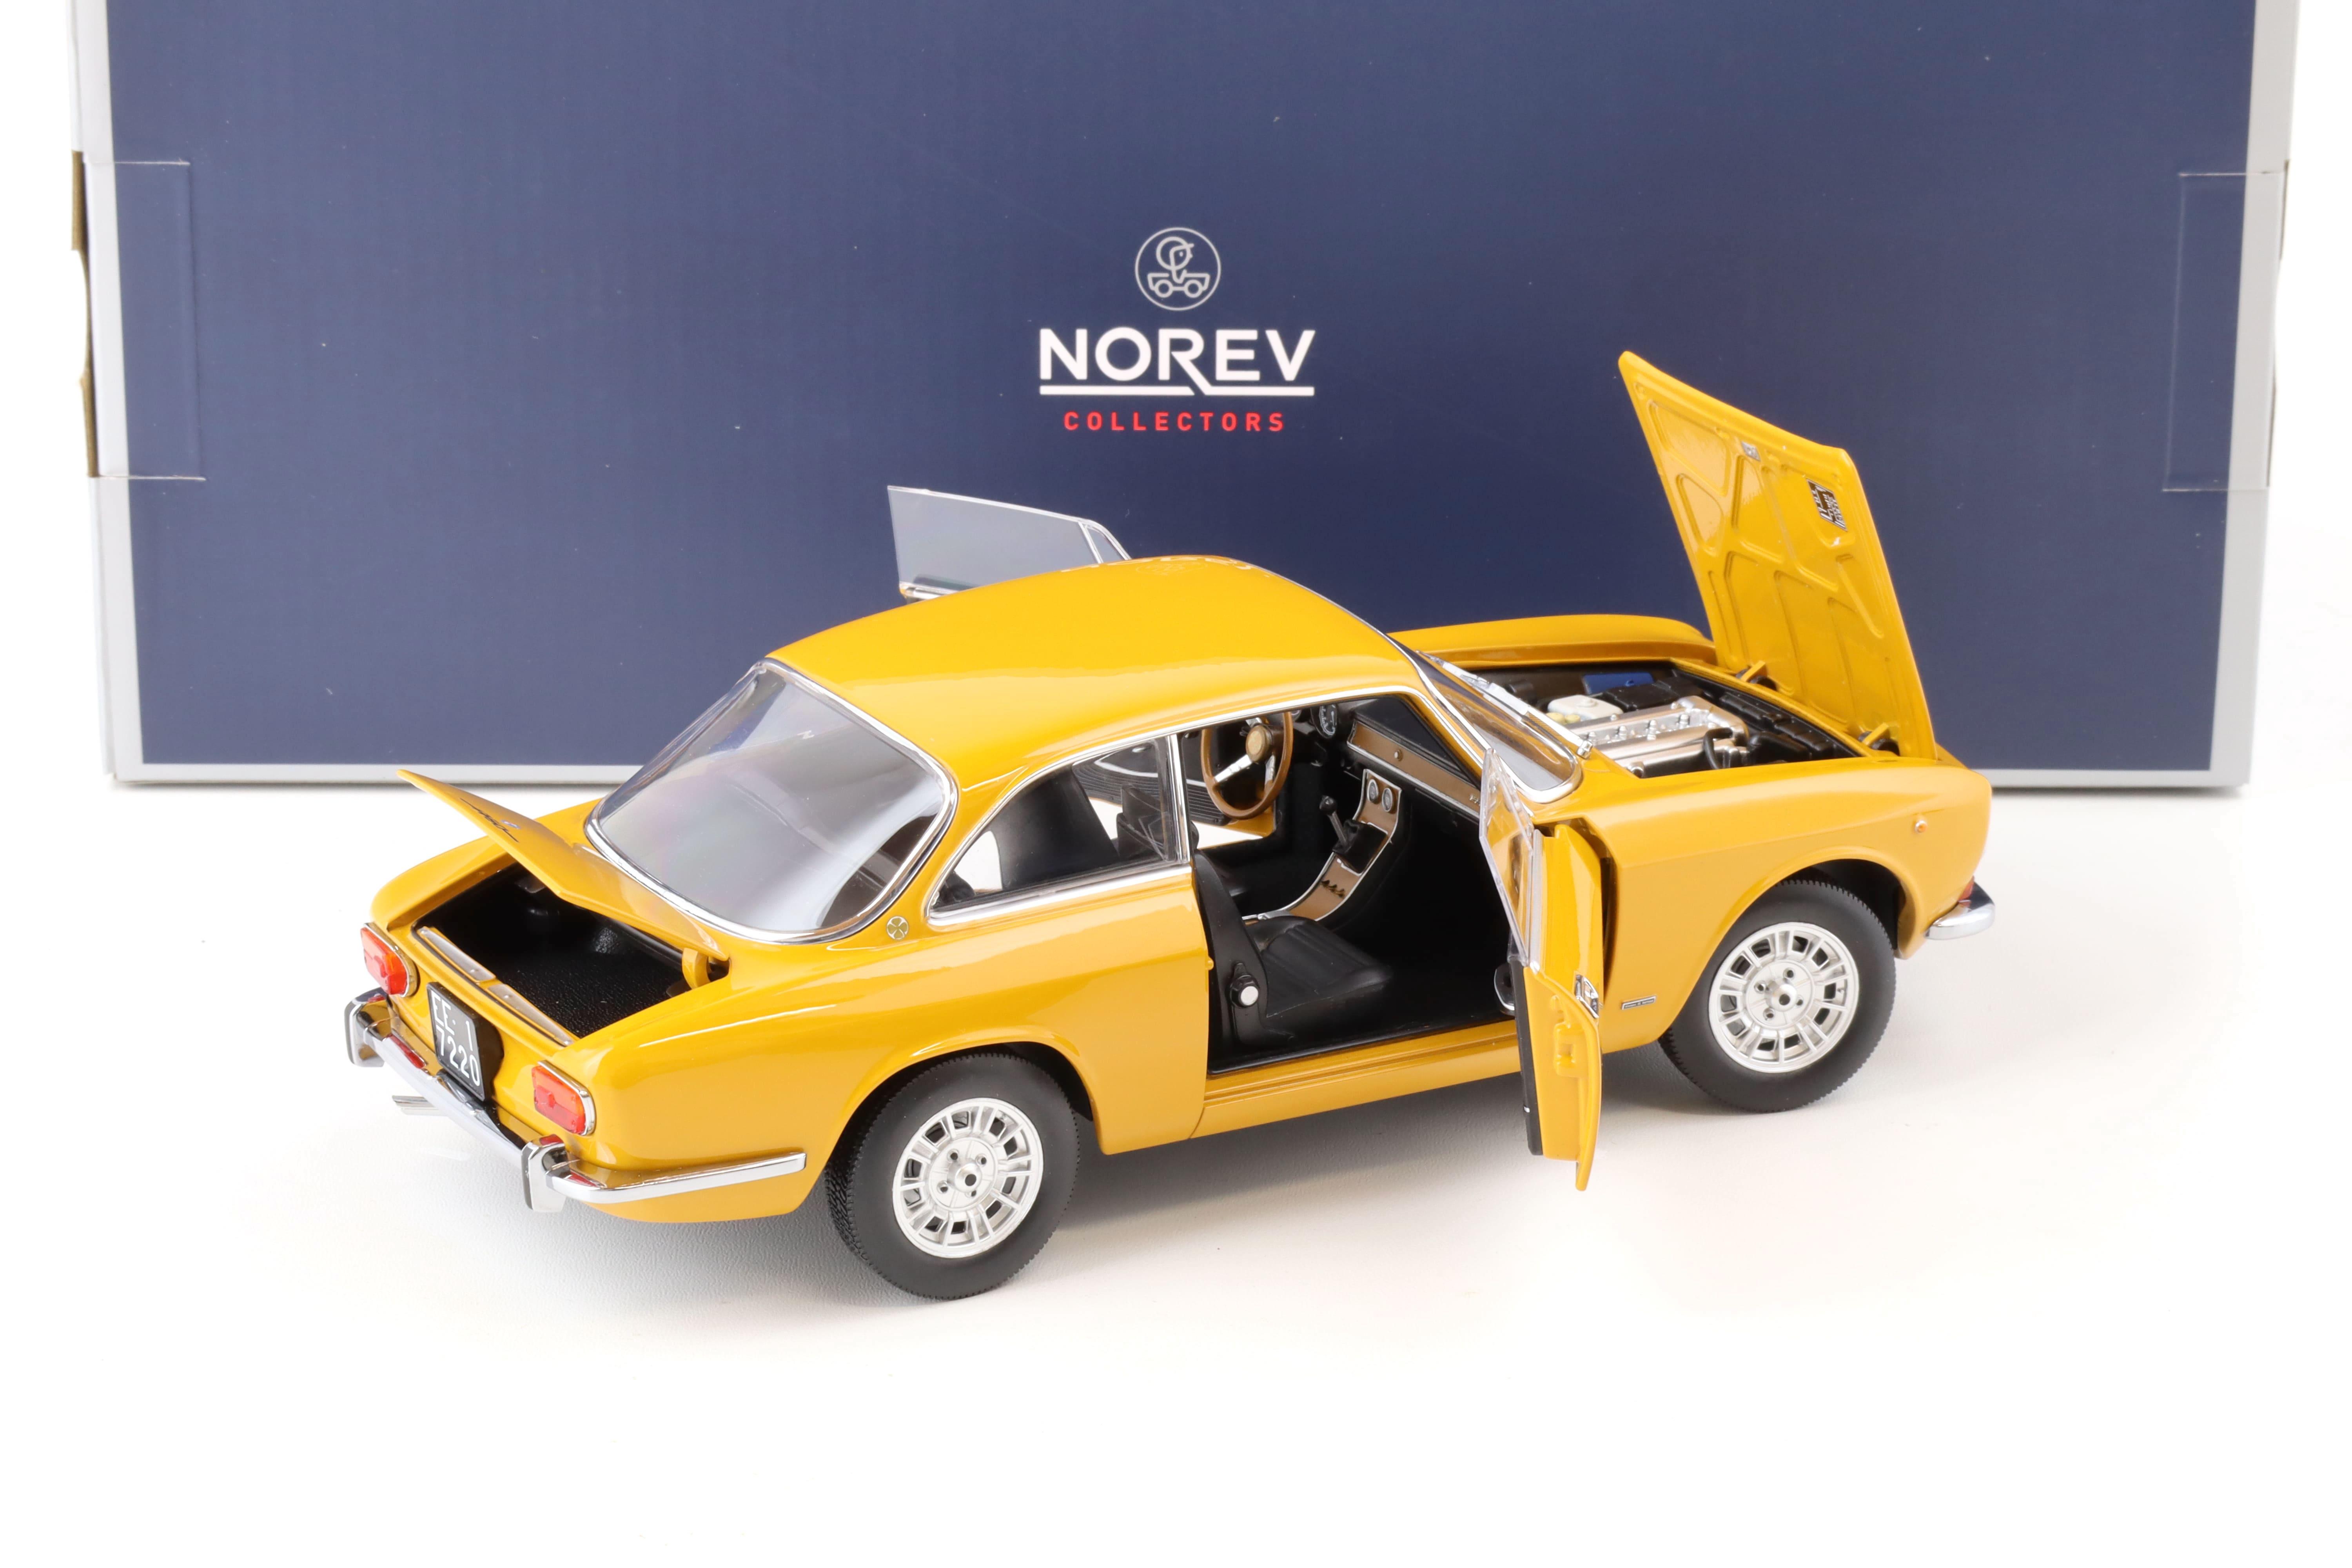 1:18 Norev 1970 Alfa Romeo 1750 GTV Coupe yellow